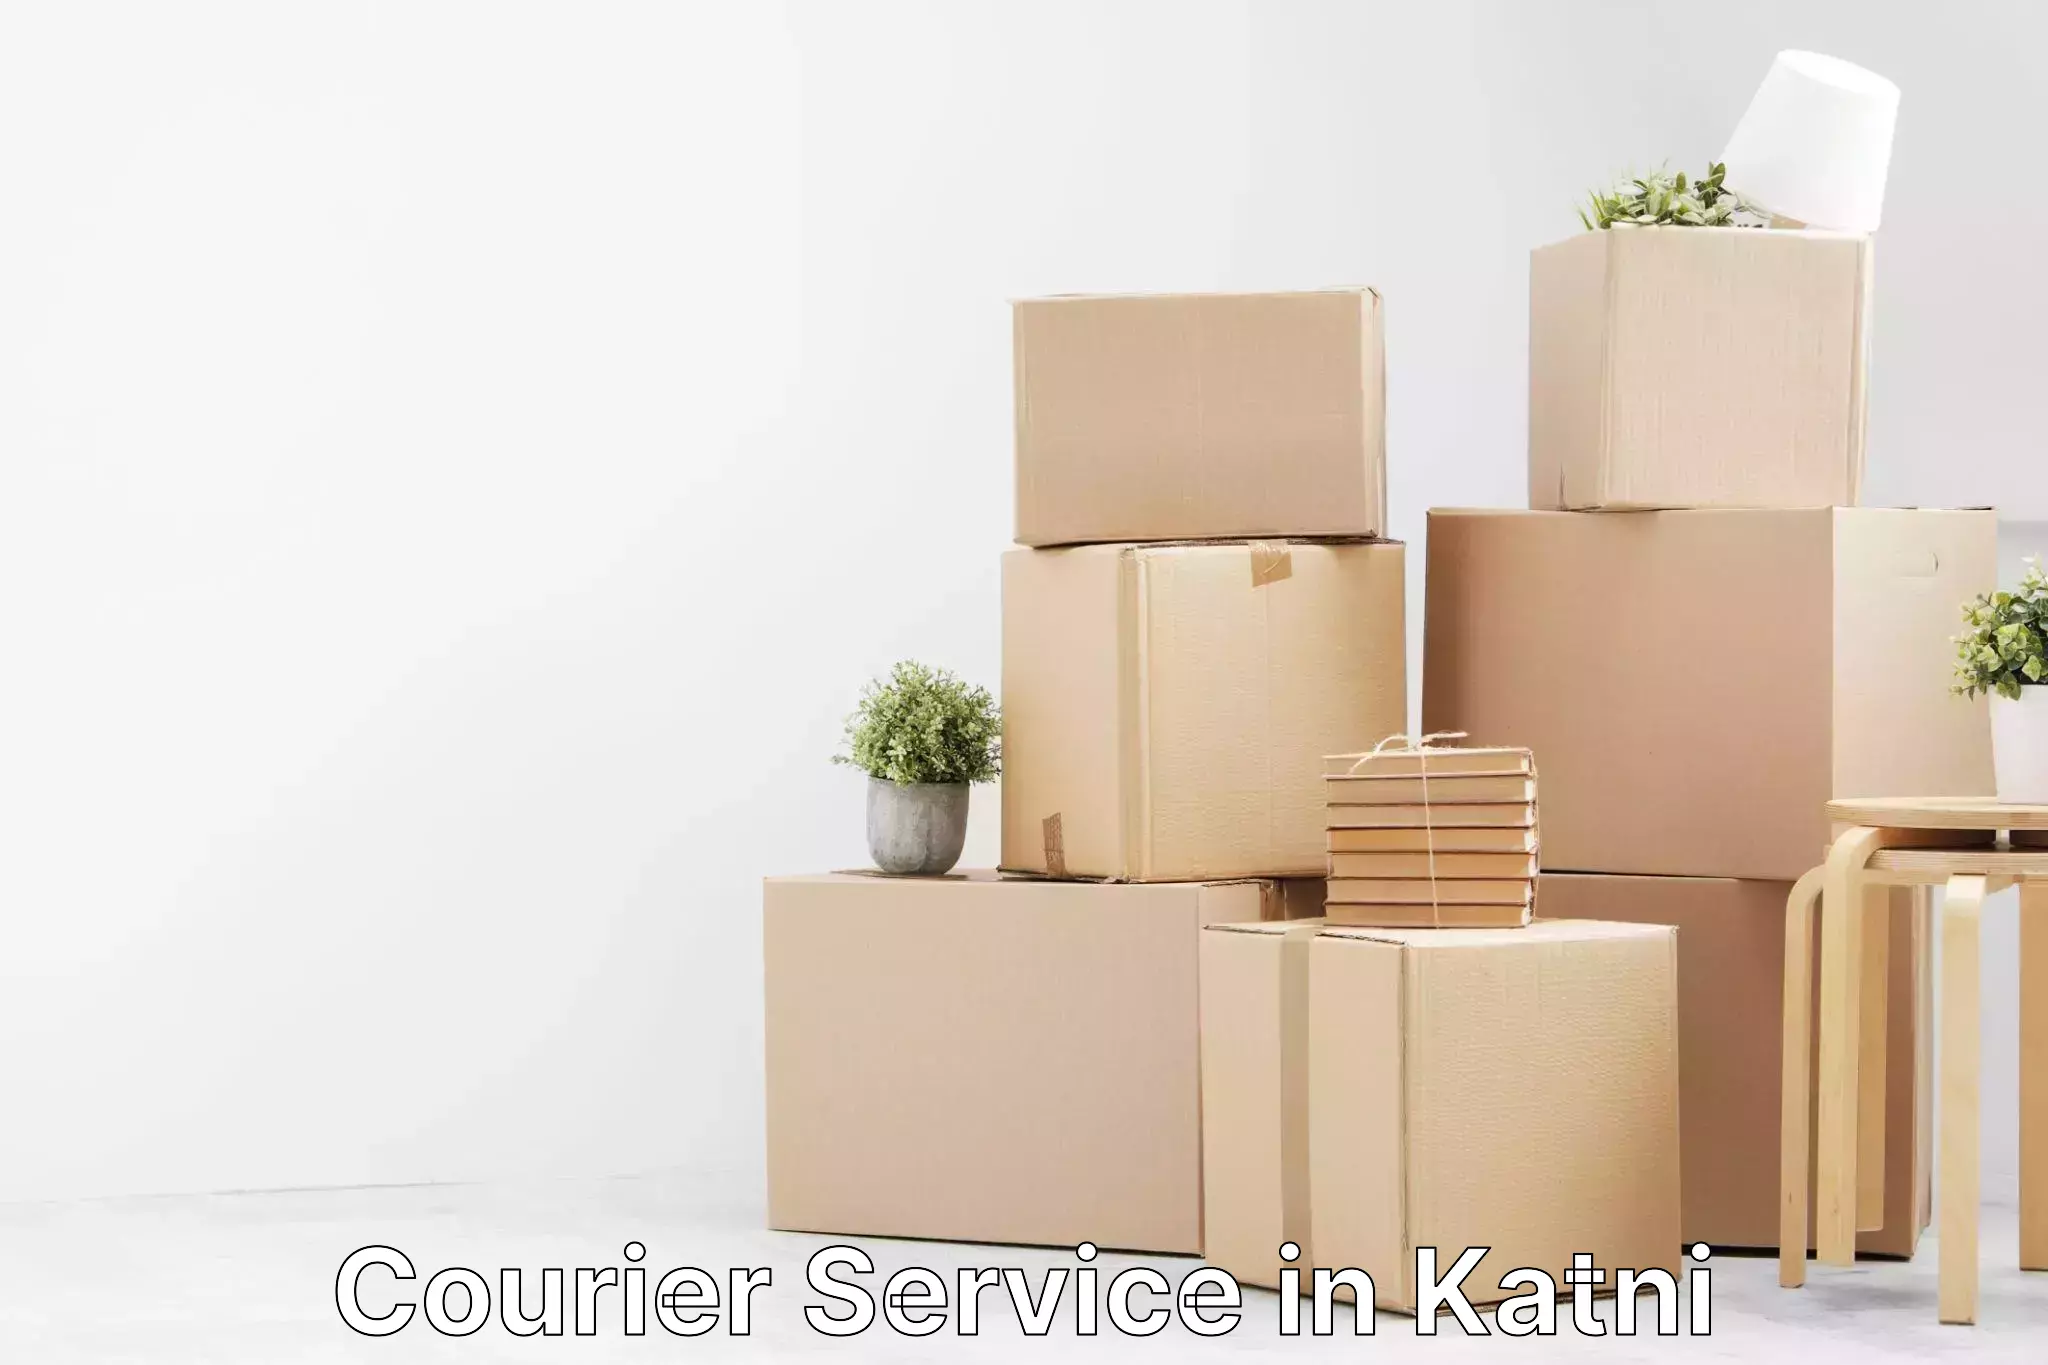 Efficient parcel tracking in Katni